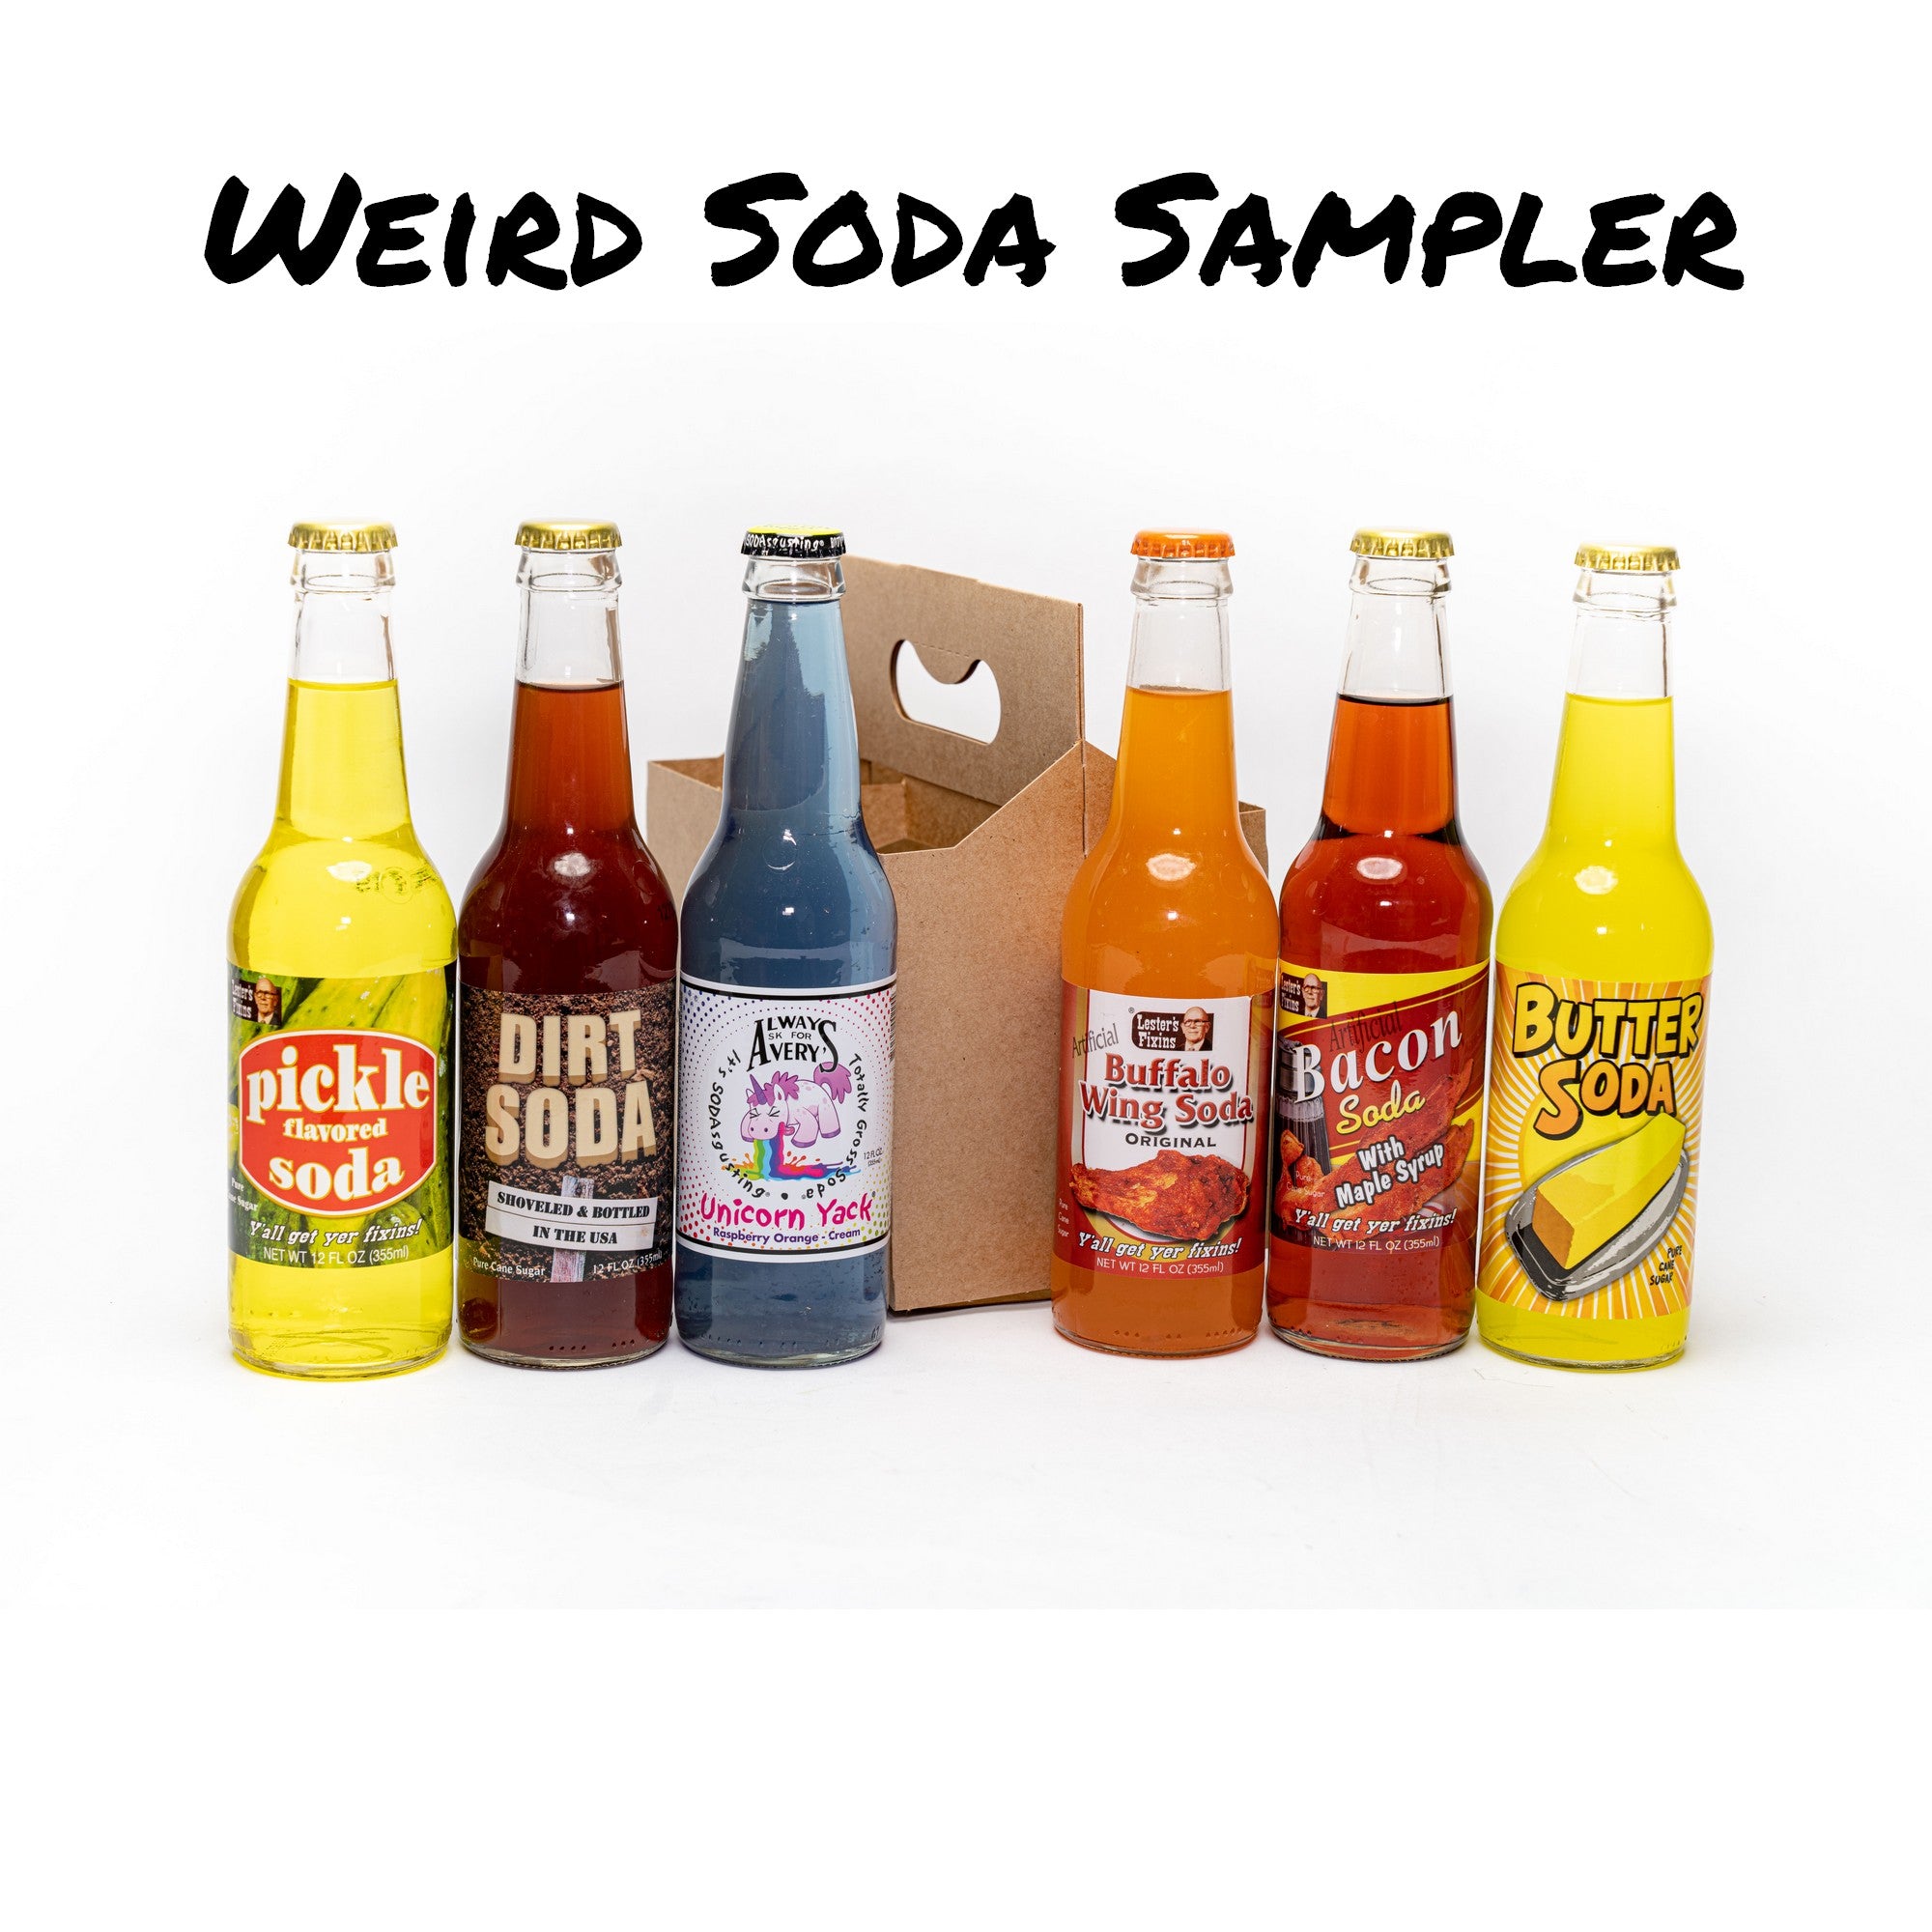 Weird & Unusual Candy Sampler Gift Box - Blooms Candy & Soda Pop Shop